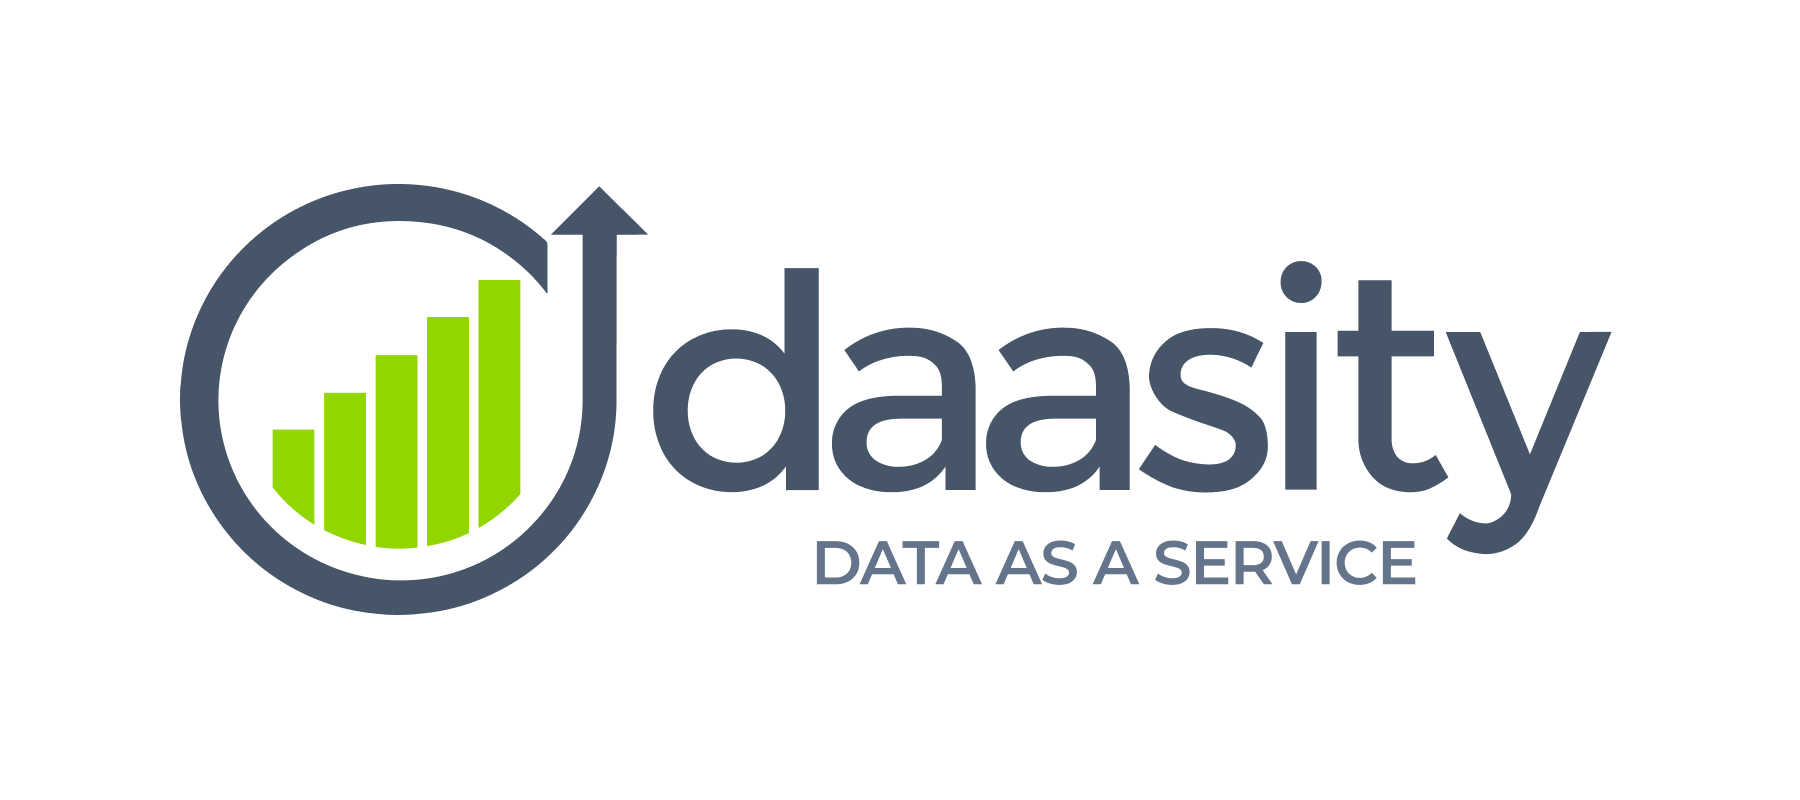 daasity-logo